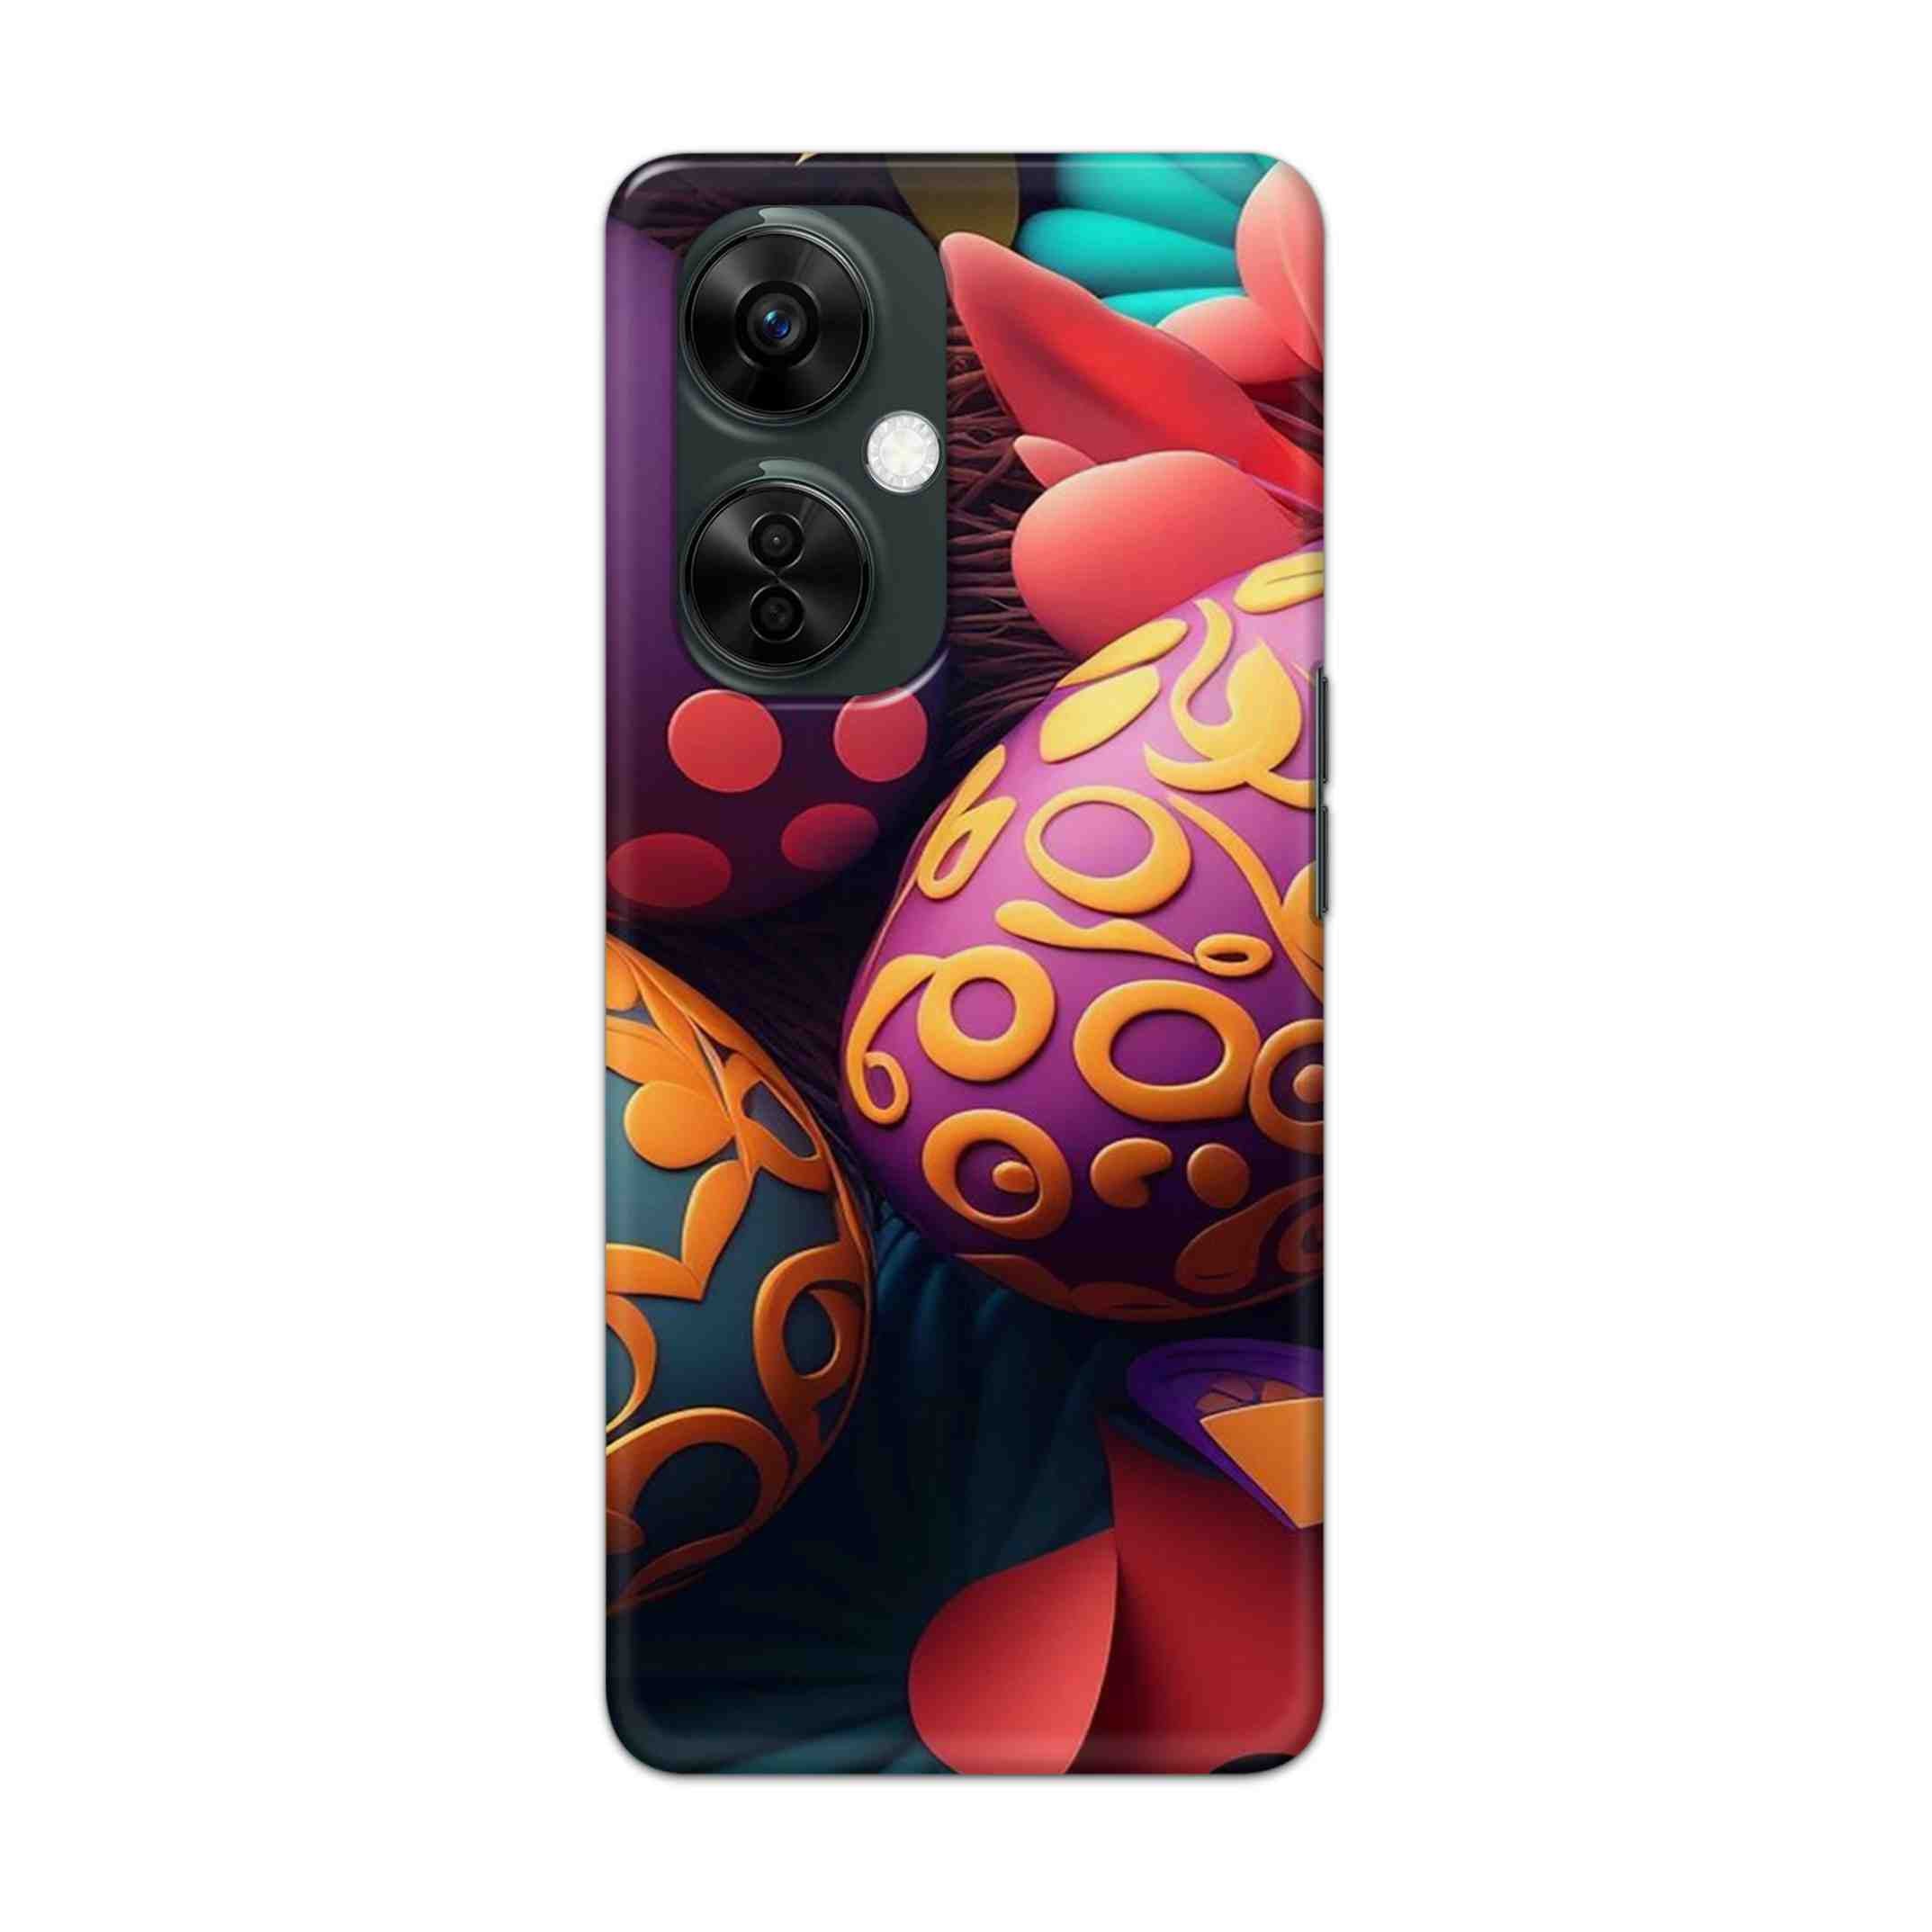 Buy Easter Egg Hard Back Mobile Phone Case Cover For Oneplus Nord CE 3 Lite Online